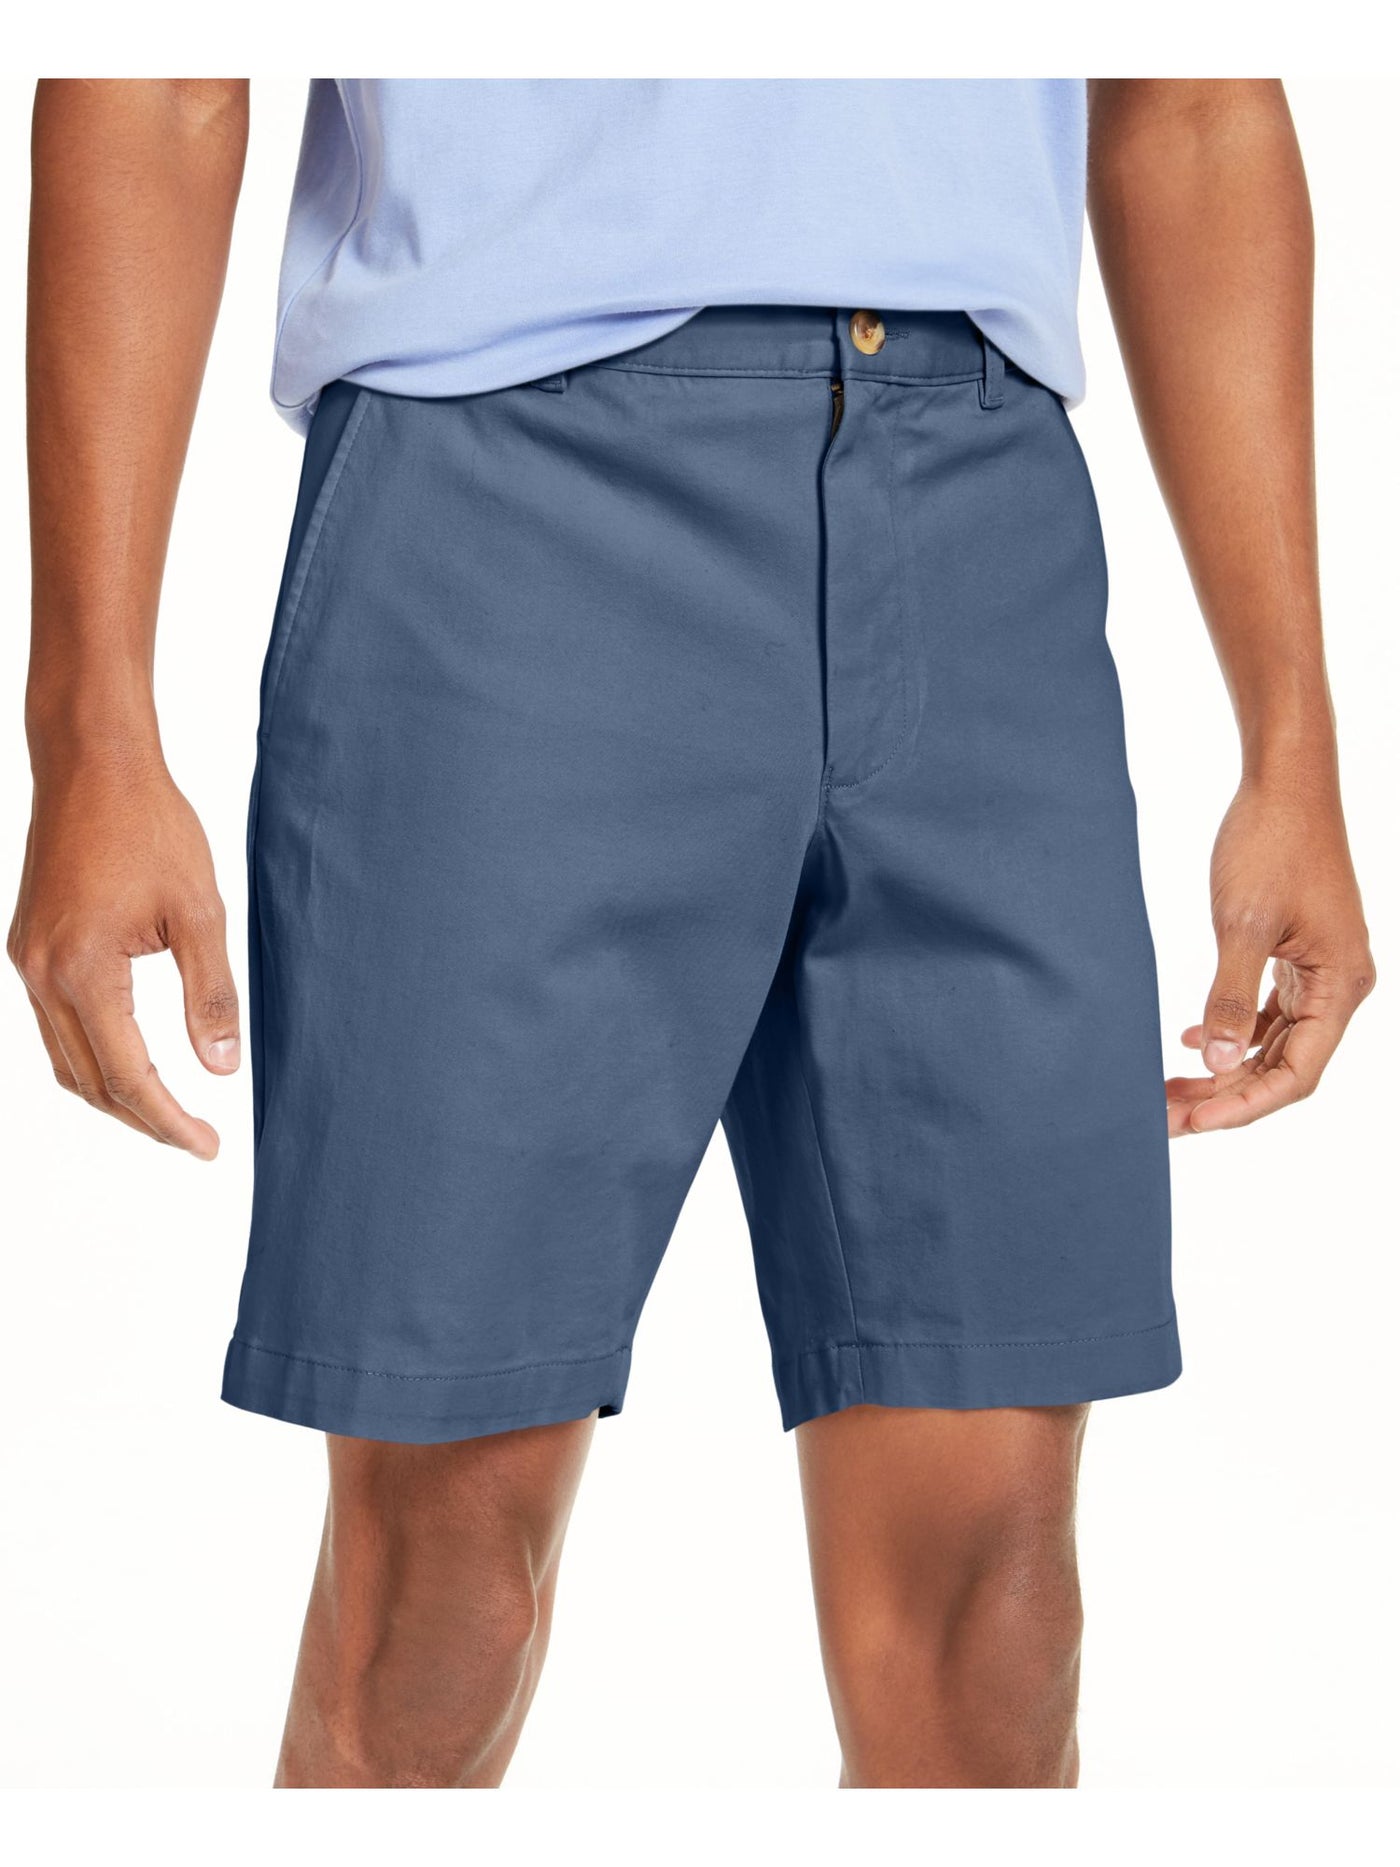 CLUBROOM Mens Light Blue Classic Fit Stretch Shorts 32 Waist